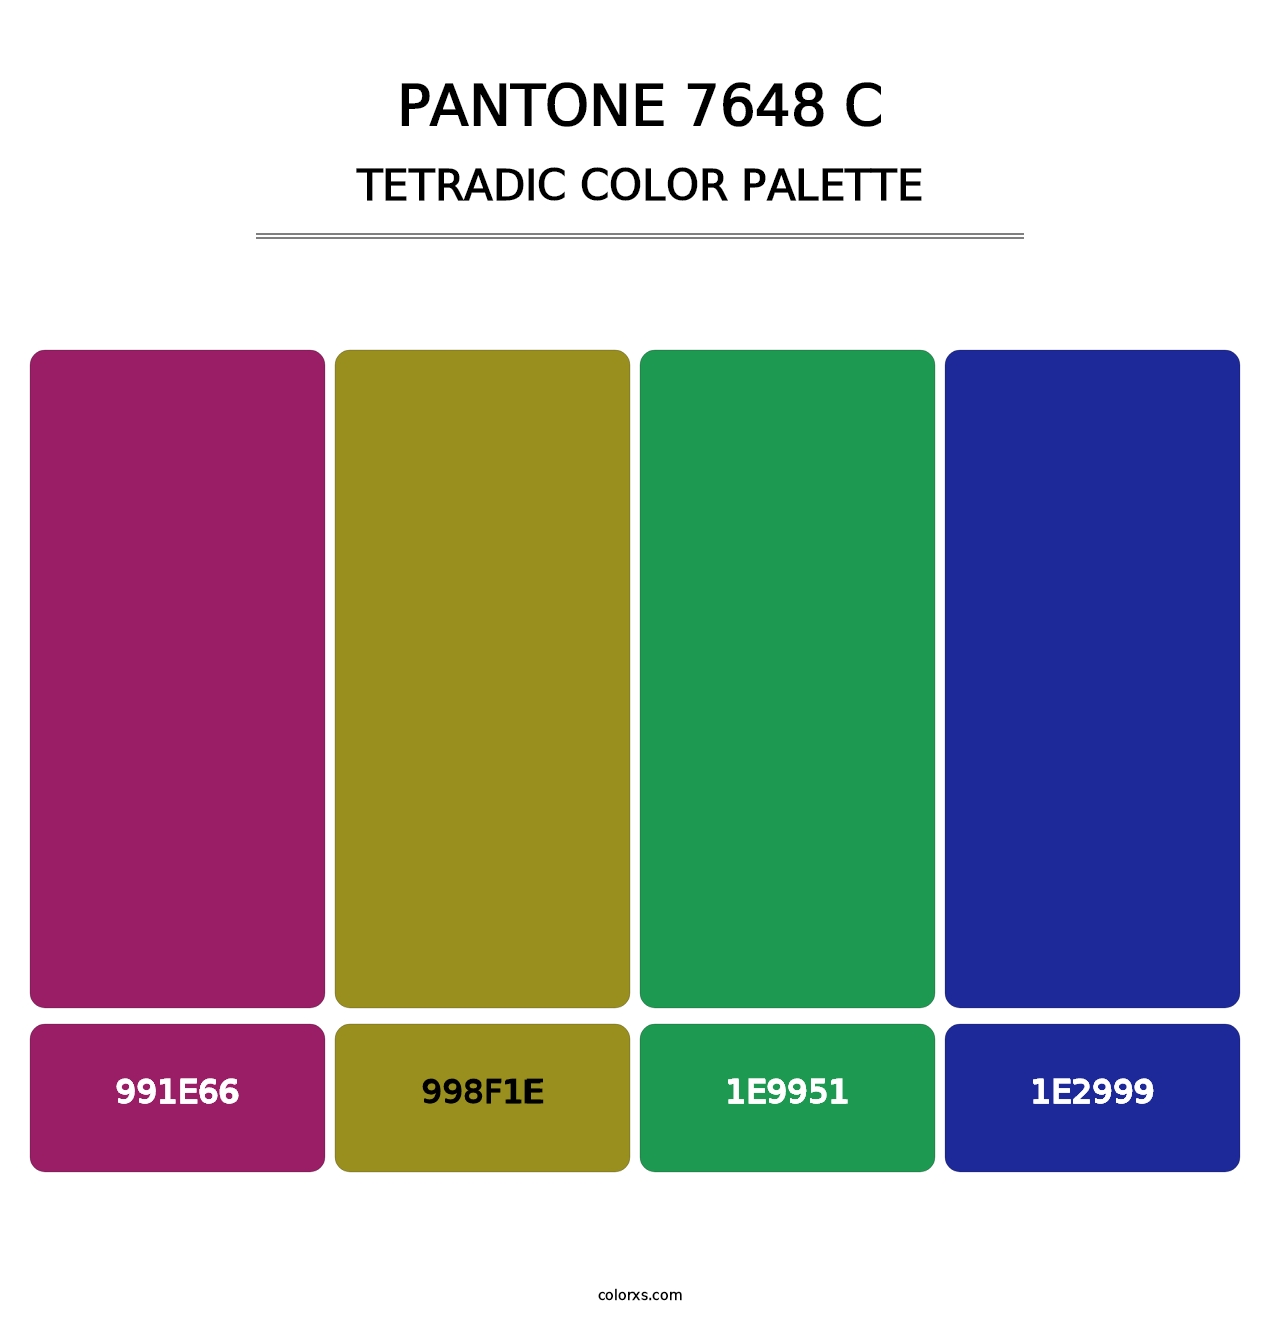 PANTONE 7648 C - Tetradic Color Palette